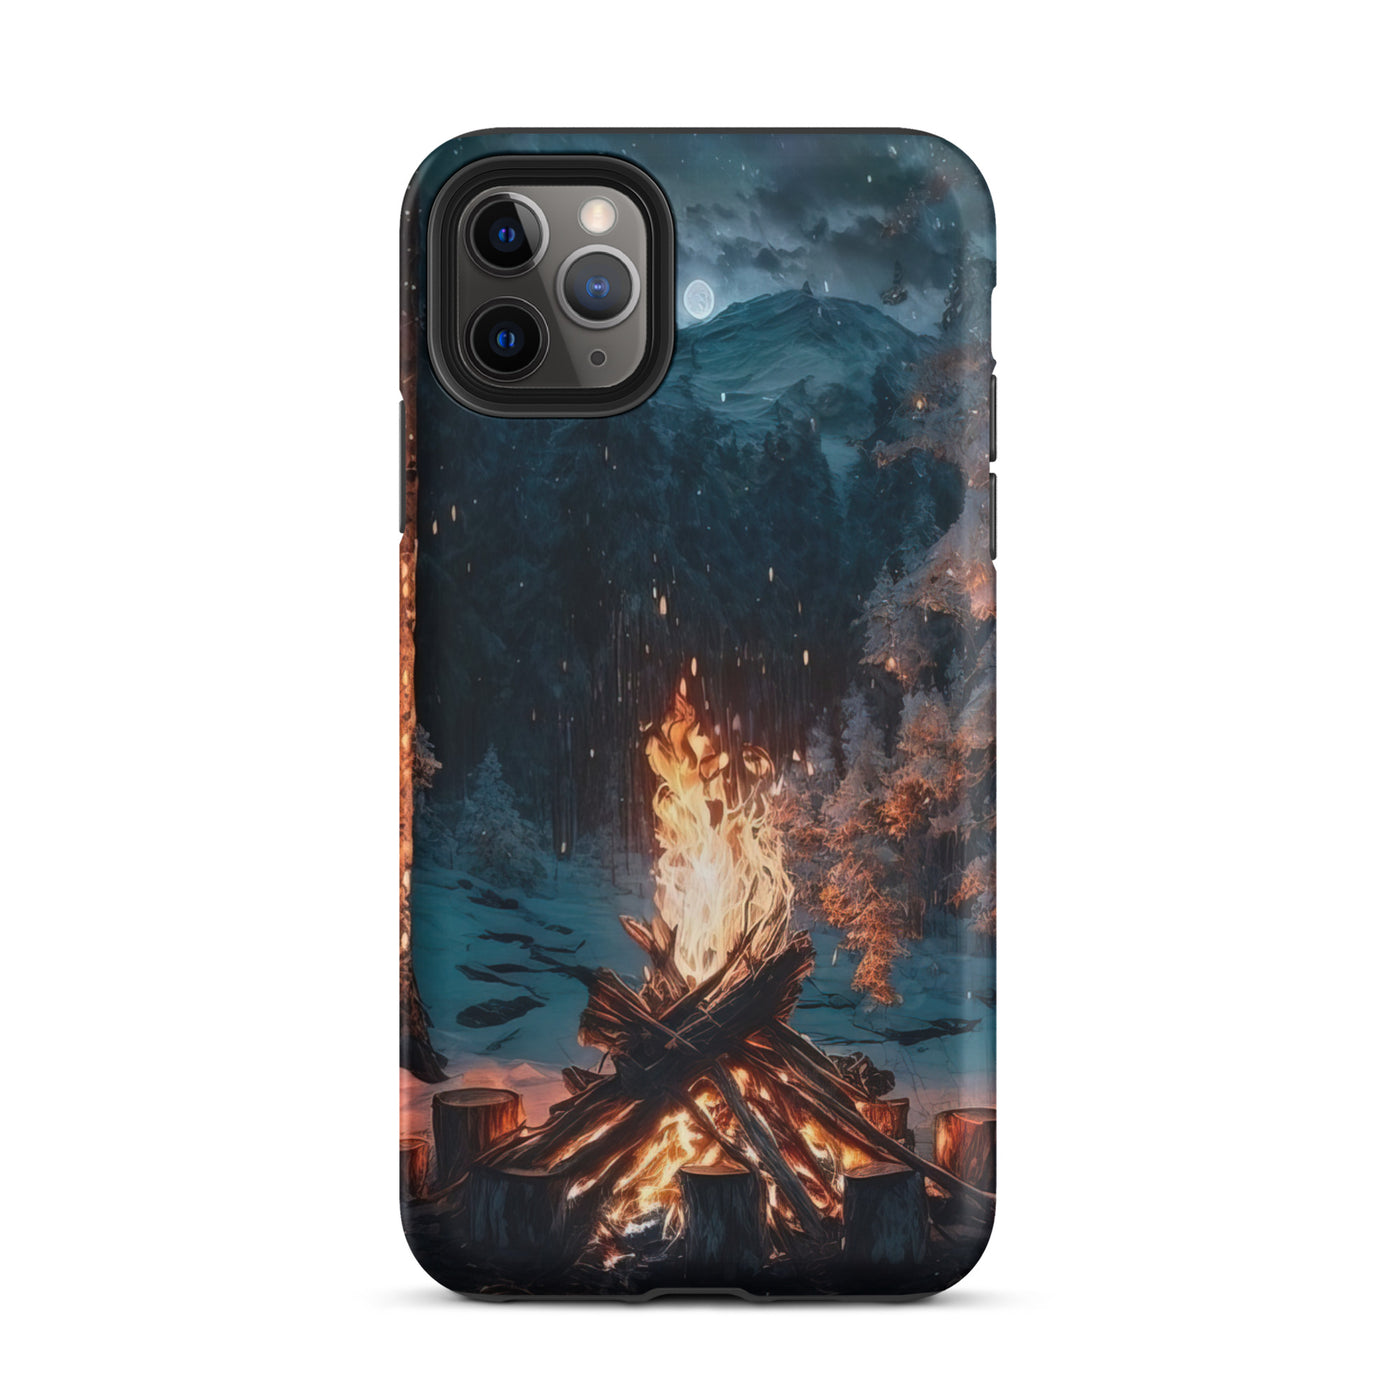 Lagerfeuer beim Camping - Wald mit Schneebedeckten Bäumen - Malerei - iPhone Schutzhülle (robust) camping xxx iPhone 11 Pro Max